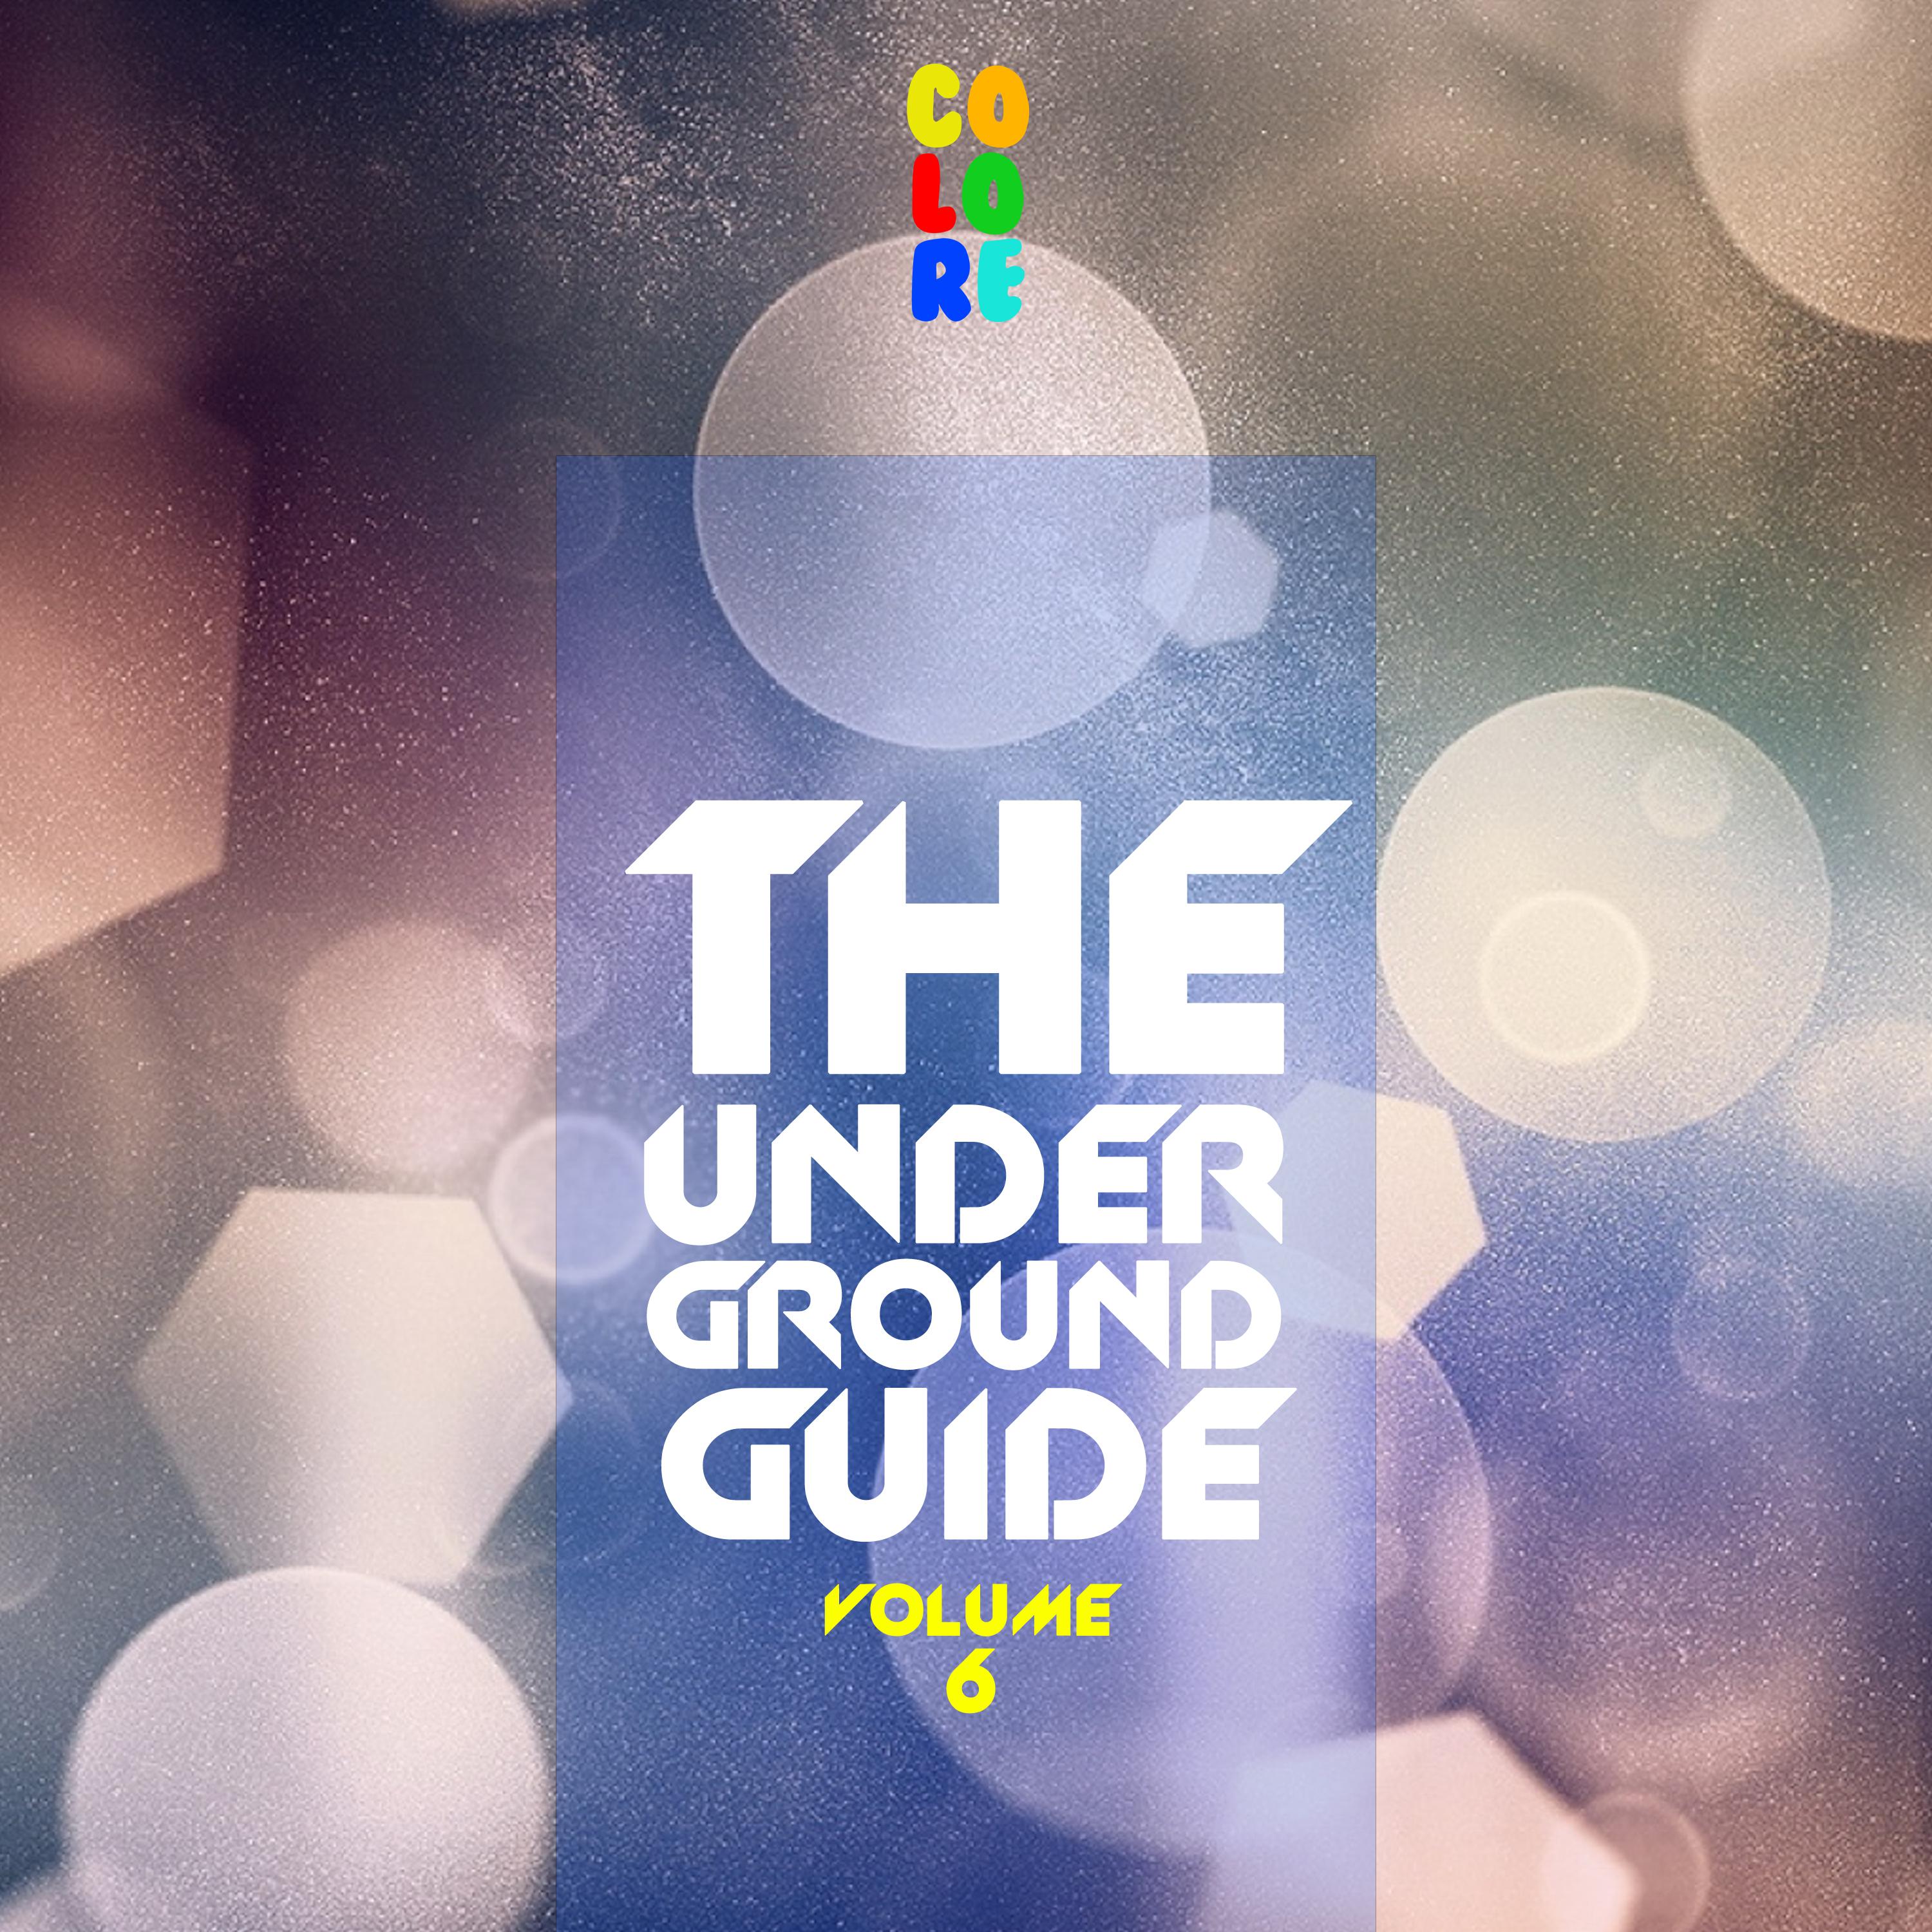 The Underground Guide, Vol. 6